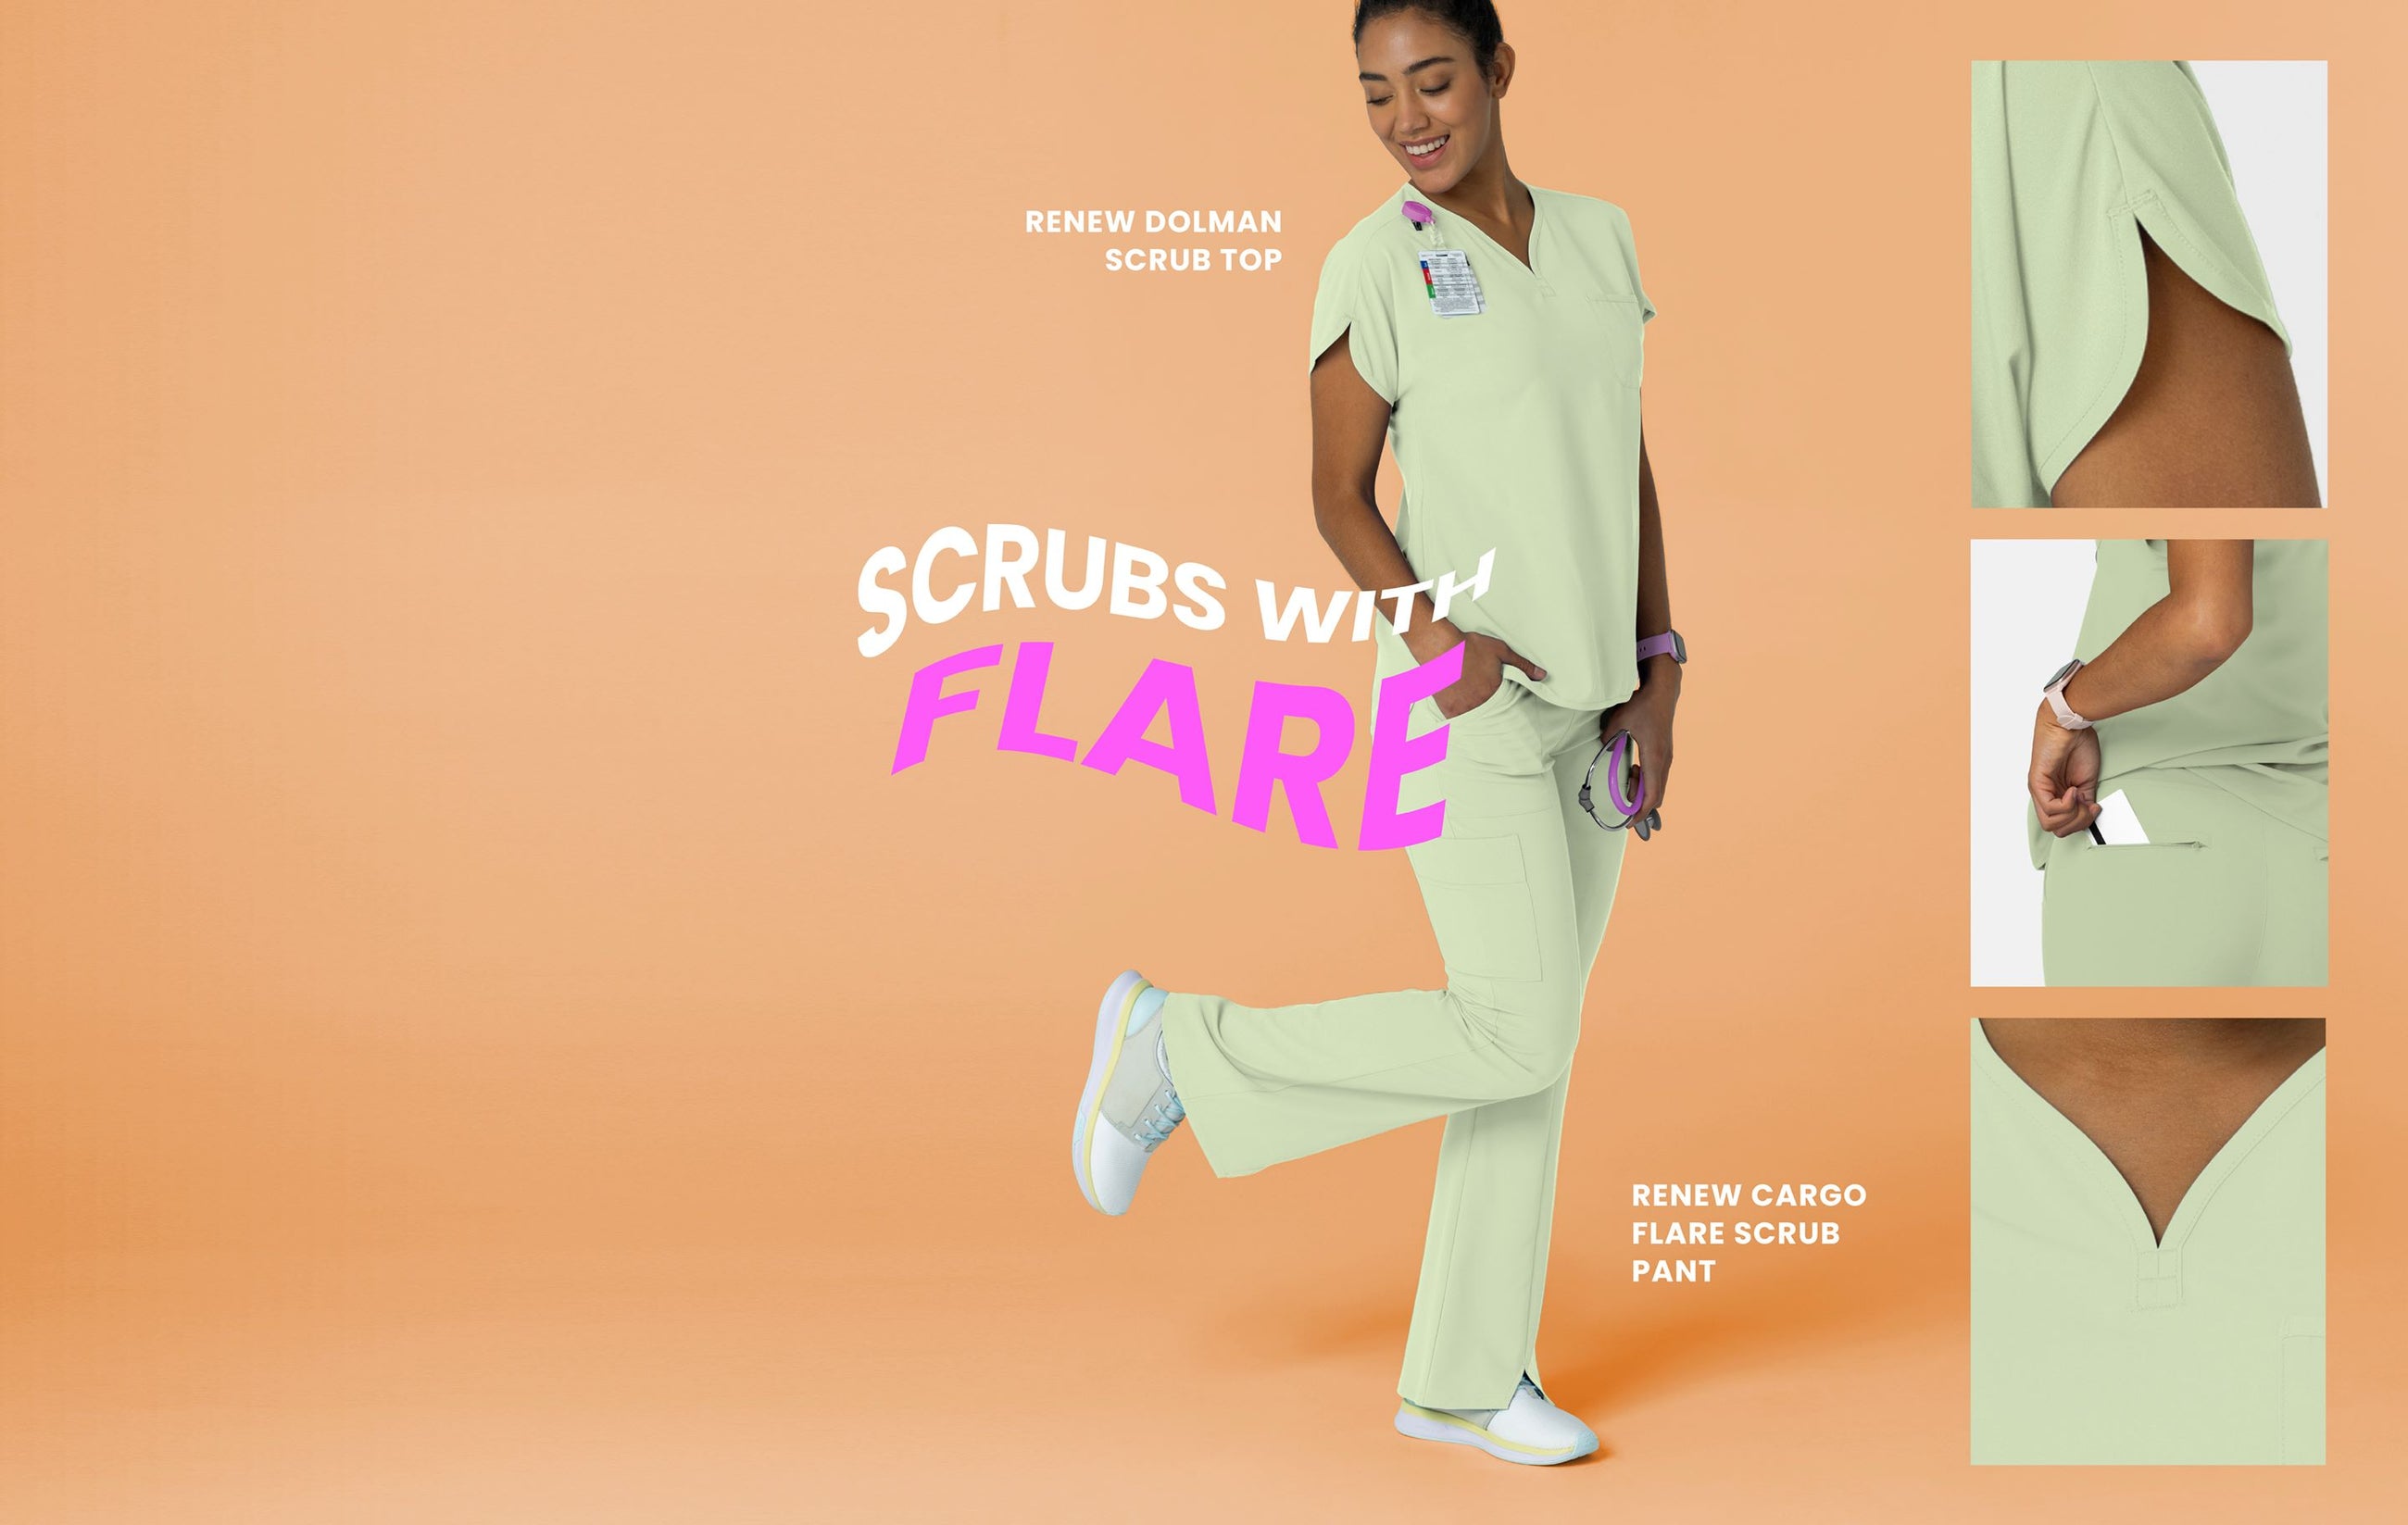 "RENEW DOLMAN SCRUB TOP; SCRUBS WITH FLARE; RENEW CARGO FLARE SCRUB PANT" New scrub styles from Wink Scrubs shown in Fresh Mint